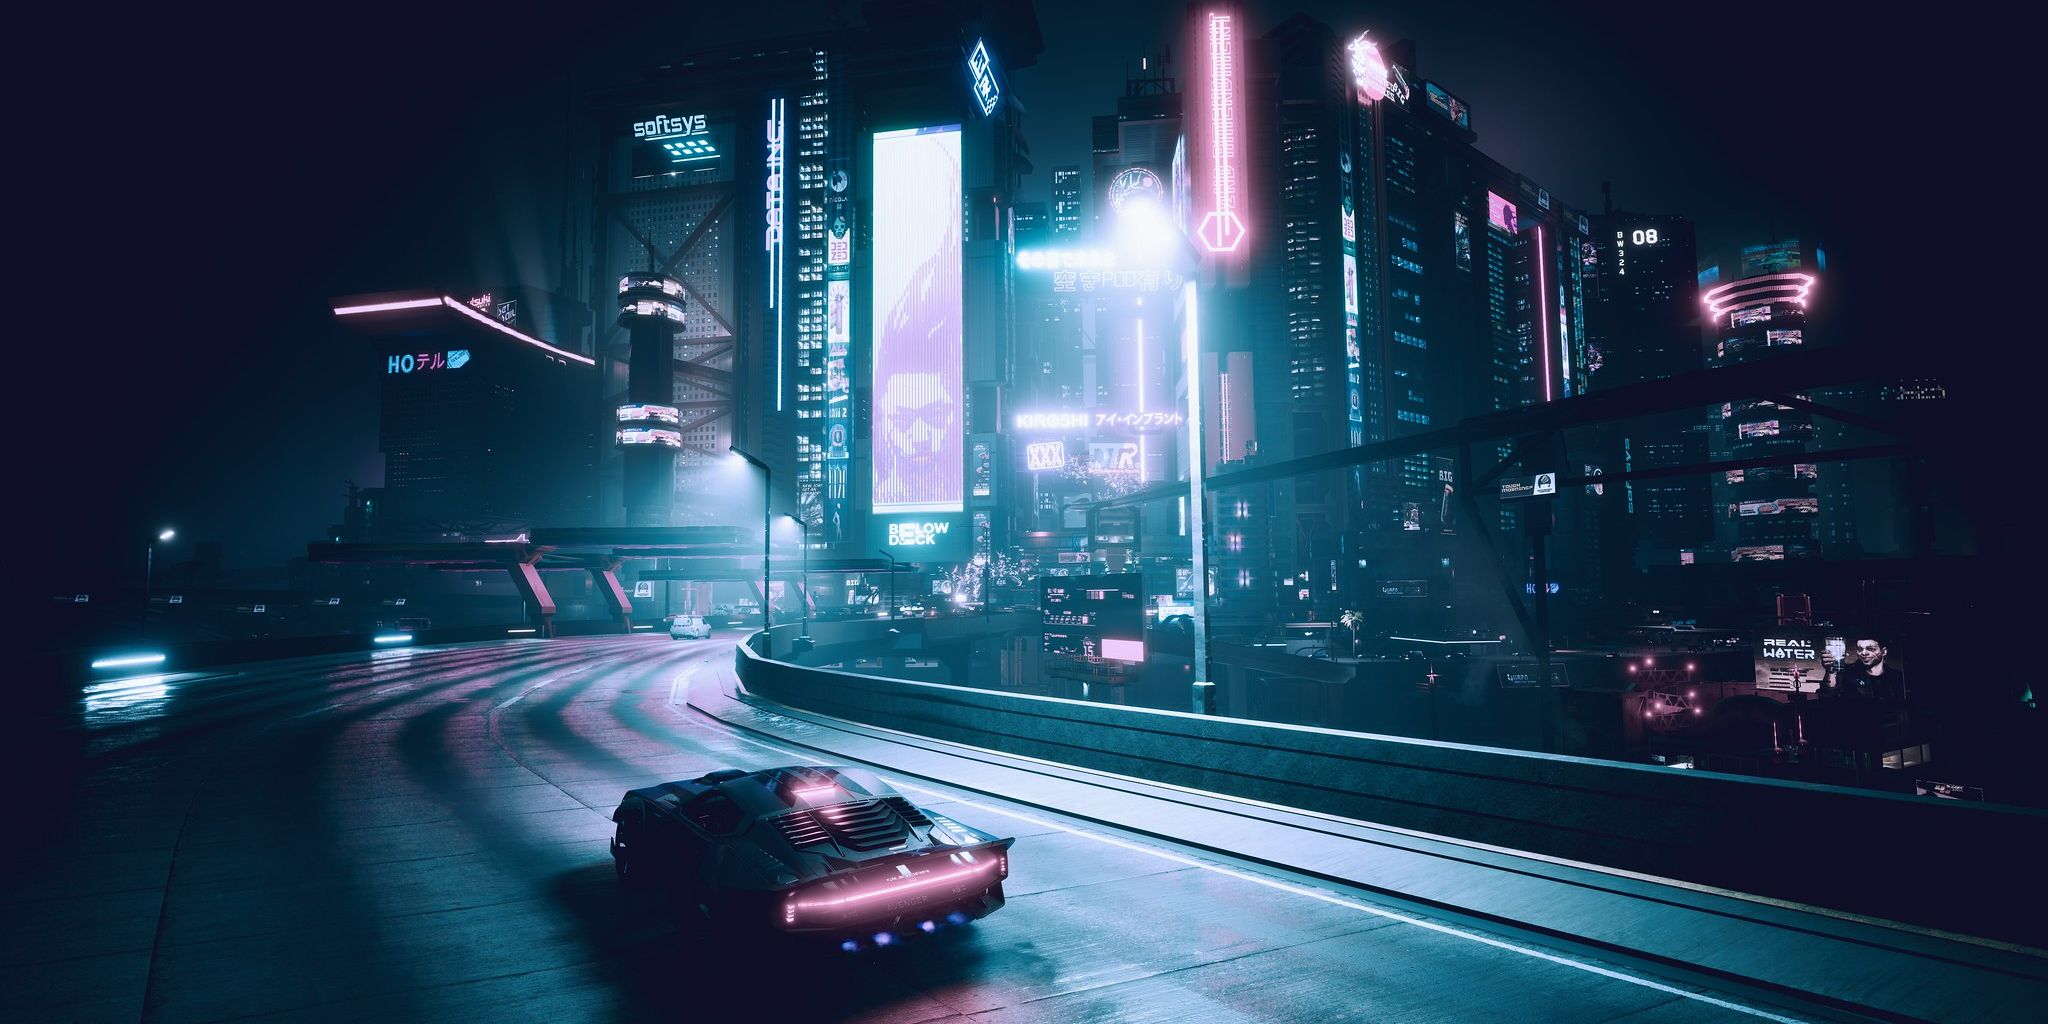 Cyberpunk 2077's Night City at nighttime